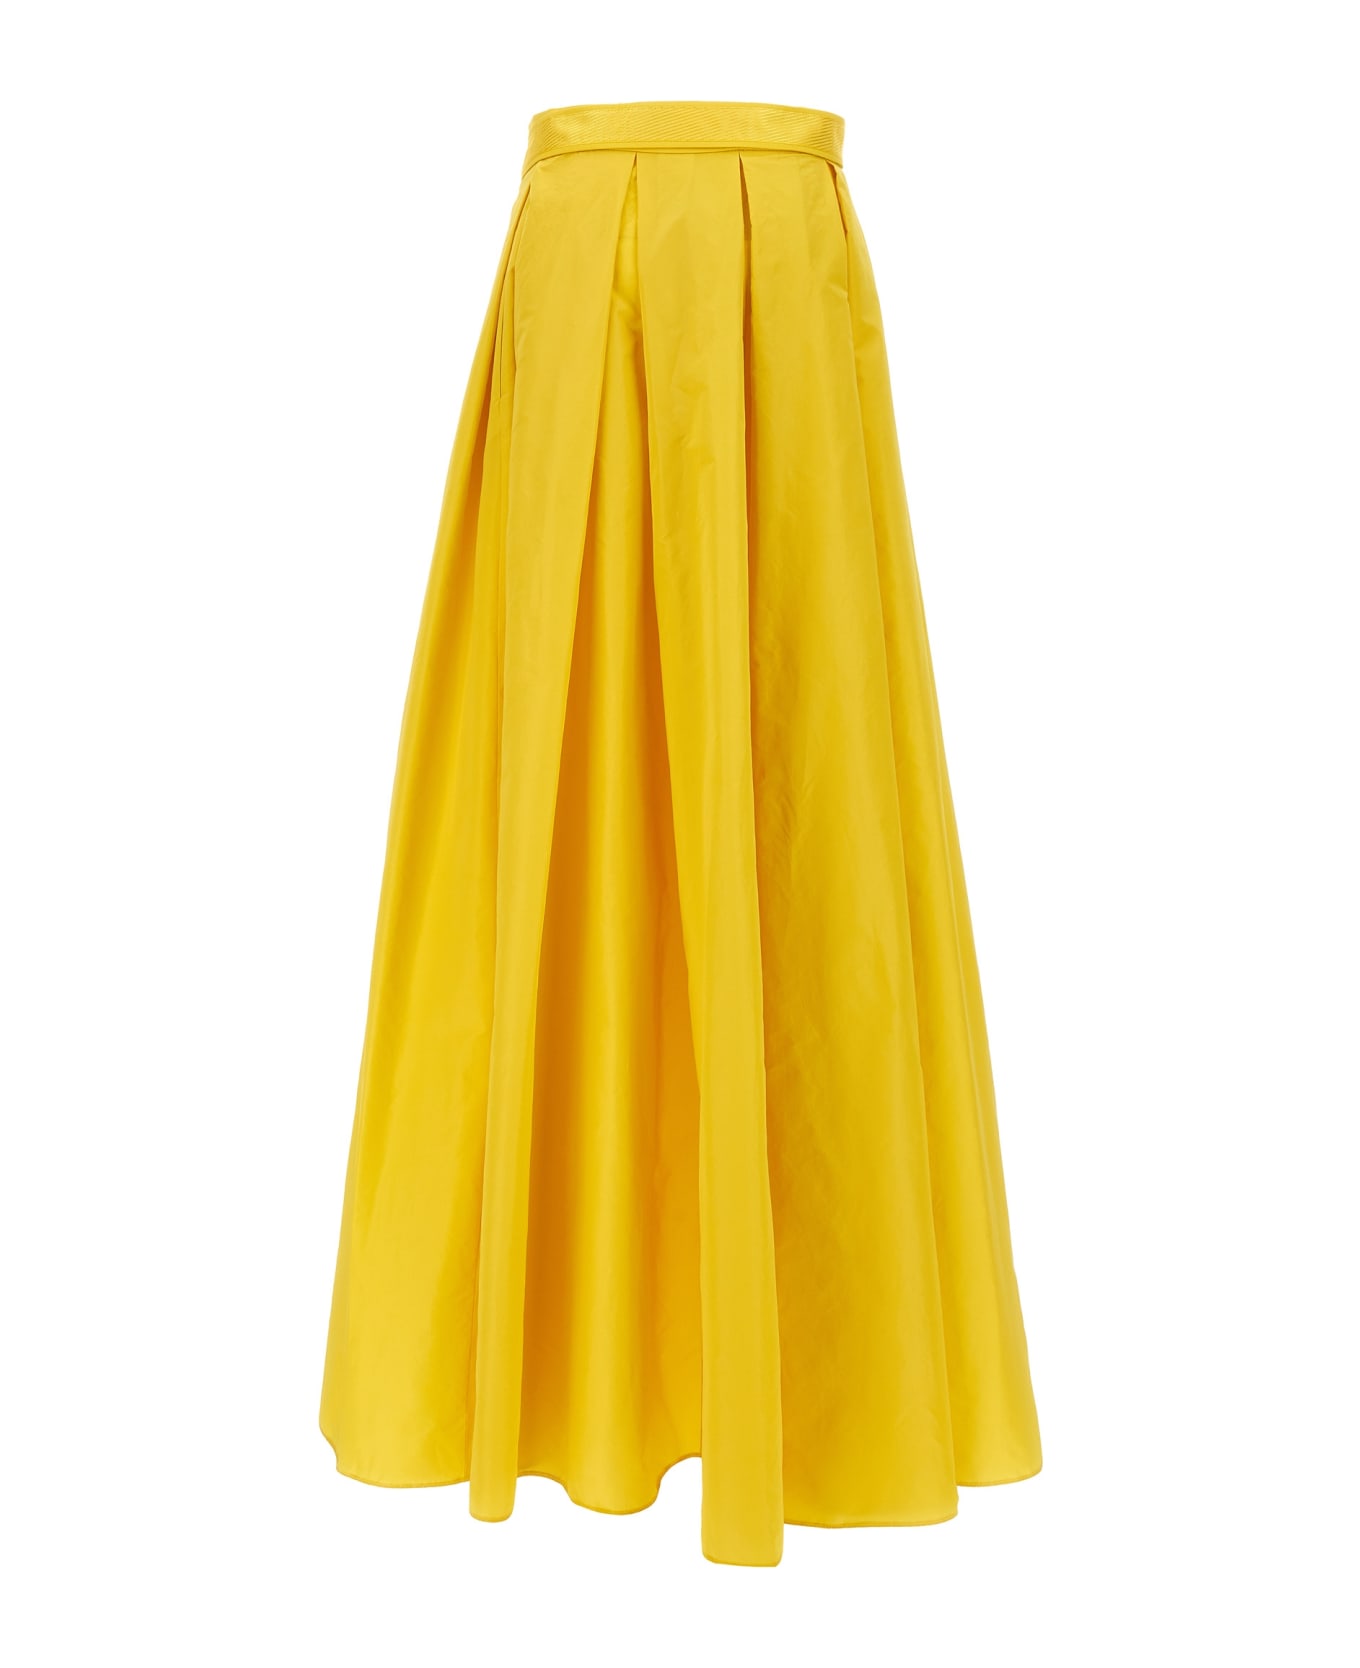 Pinko Nocepesca Taffeta Skirt - Yellow